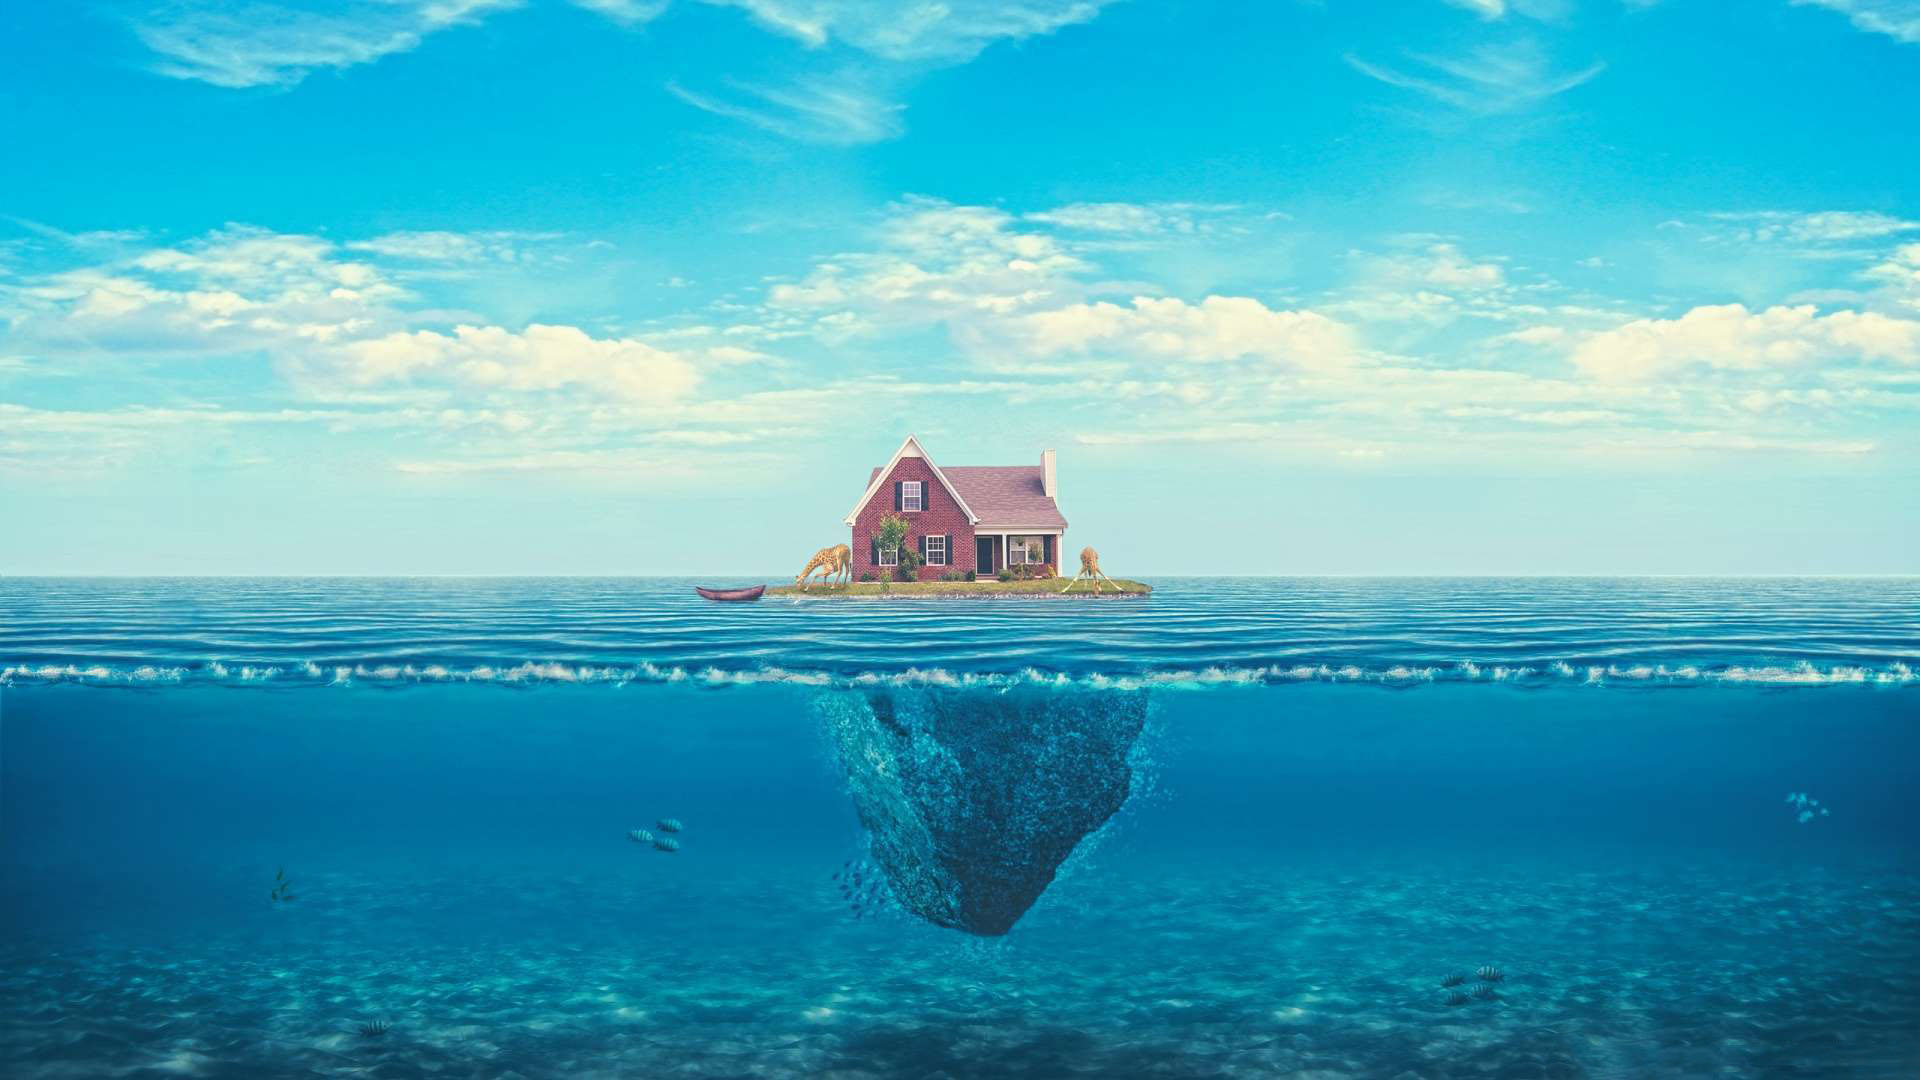 House On The Ocean Wallpaper 1080p 23119 Wallpaper High